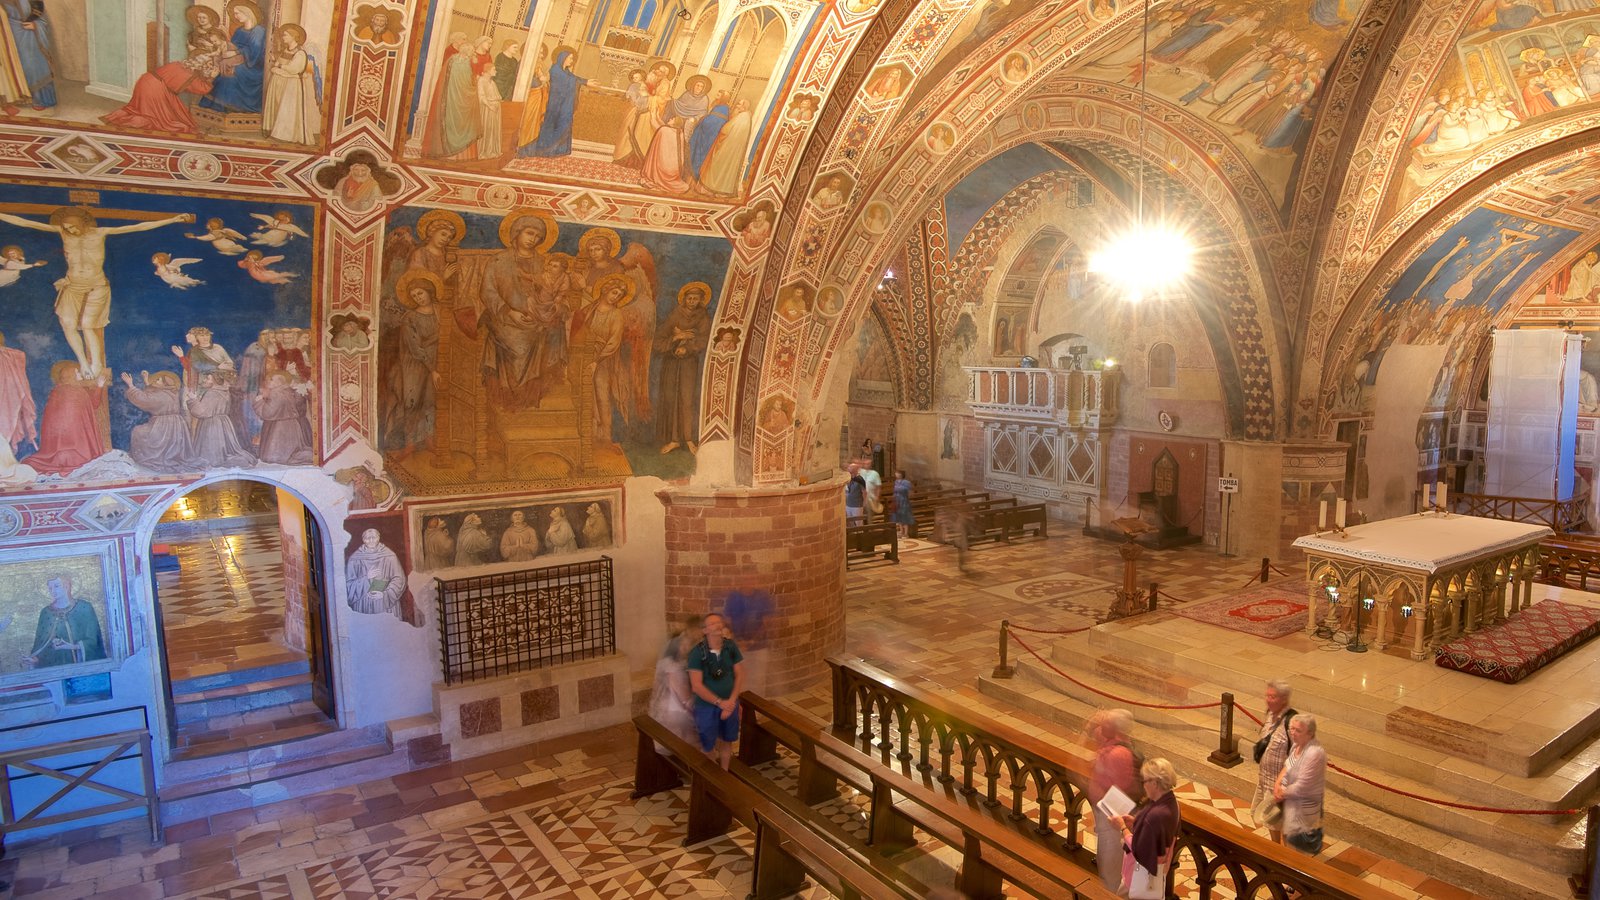 Assisi HD wallpapers, Desktop wallpaper - most viewed